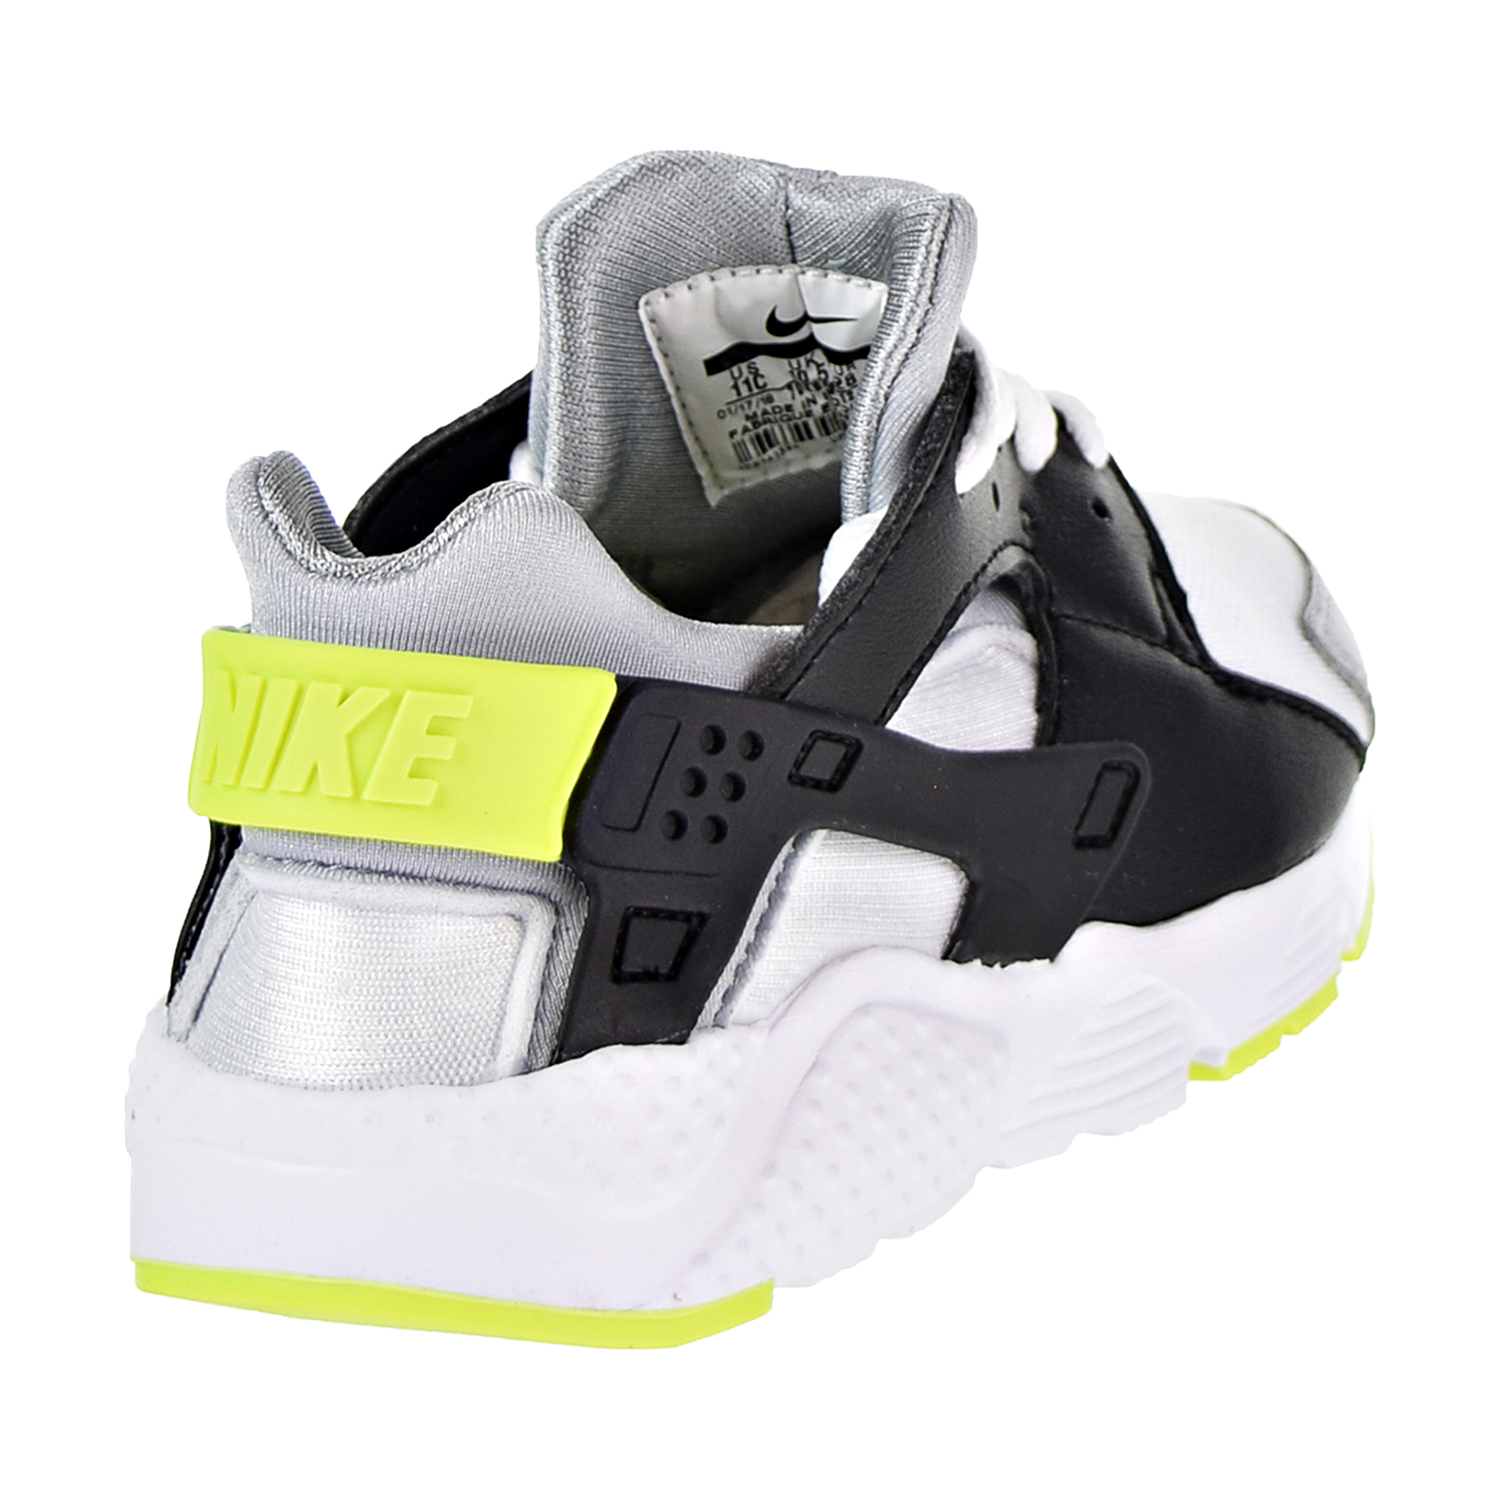 Nike Huarache Little Kid's Running Shoes University White/Cyber/Photo Blue 704949-112 - image 3 of 6